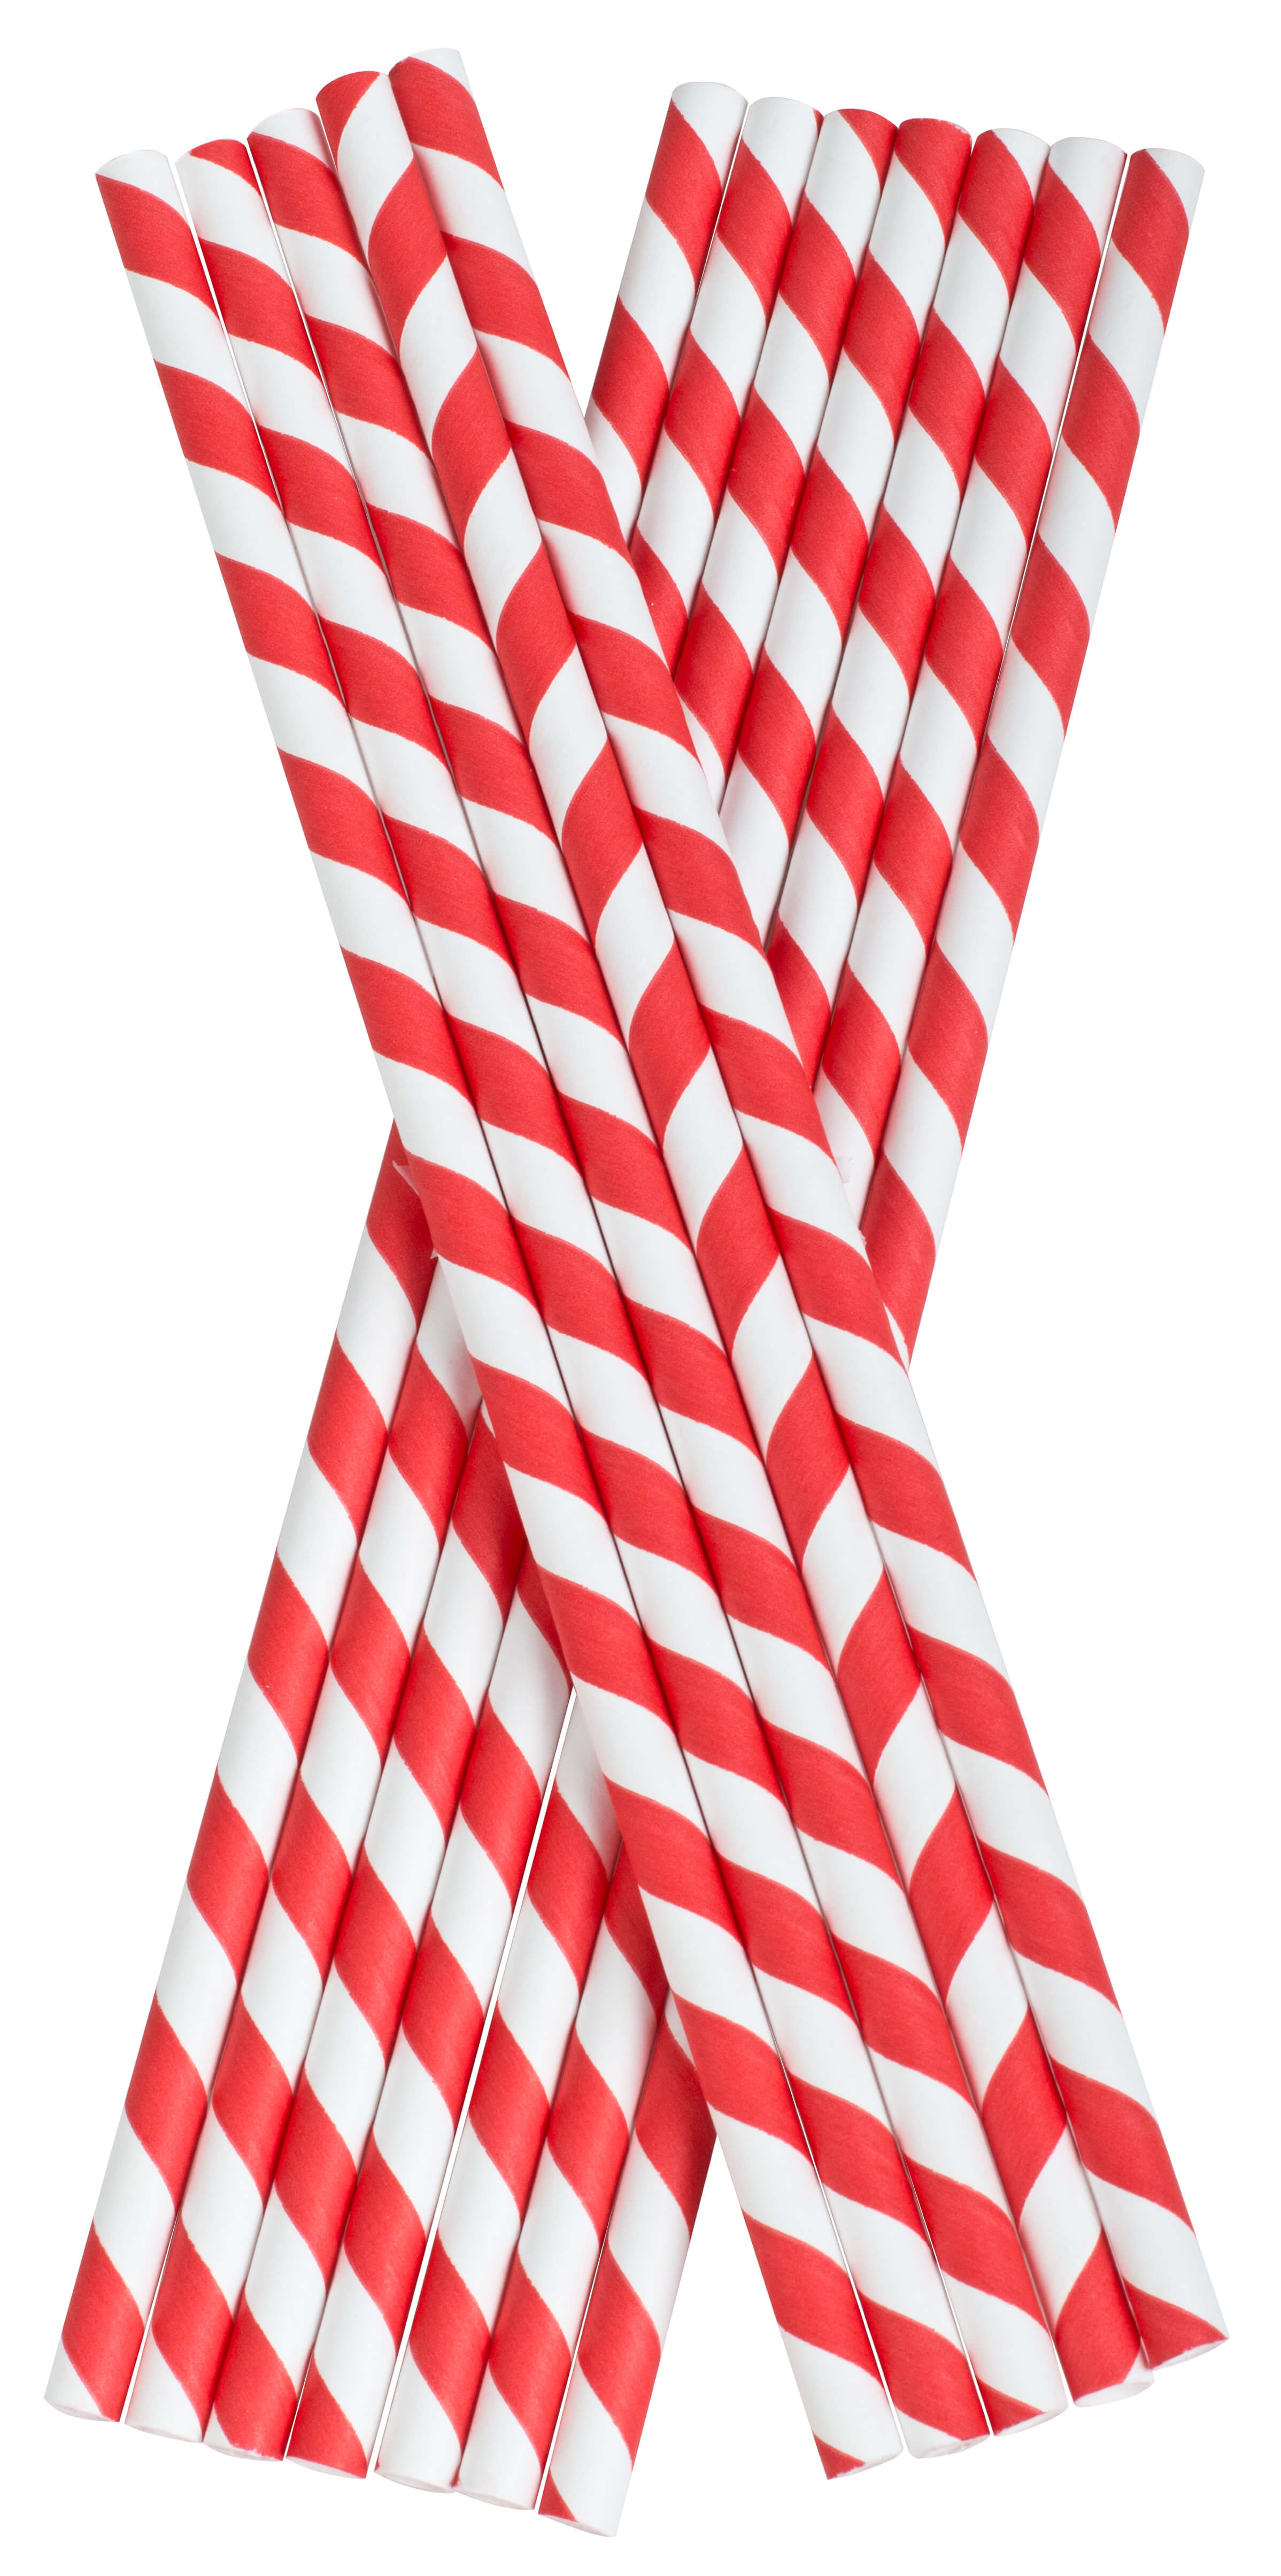 Drinking Straws, Paper (8x255mm) - red white striped